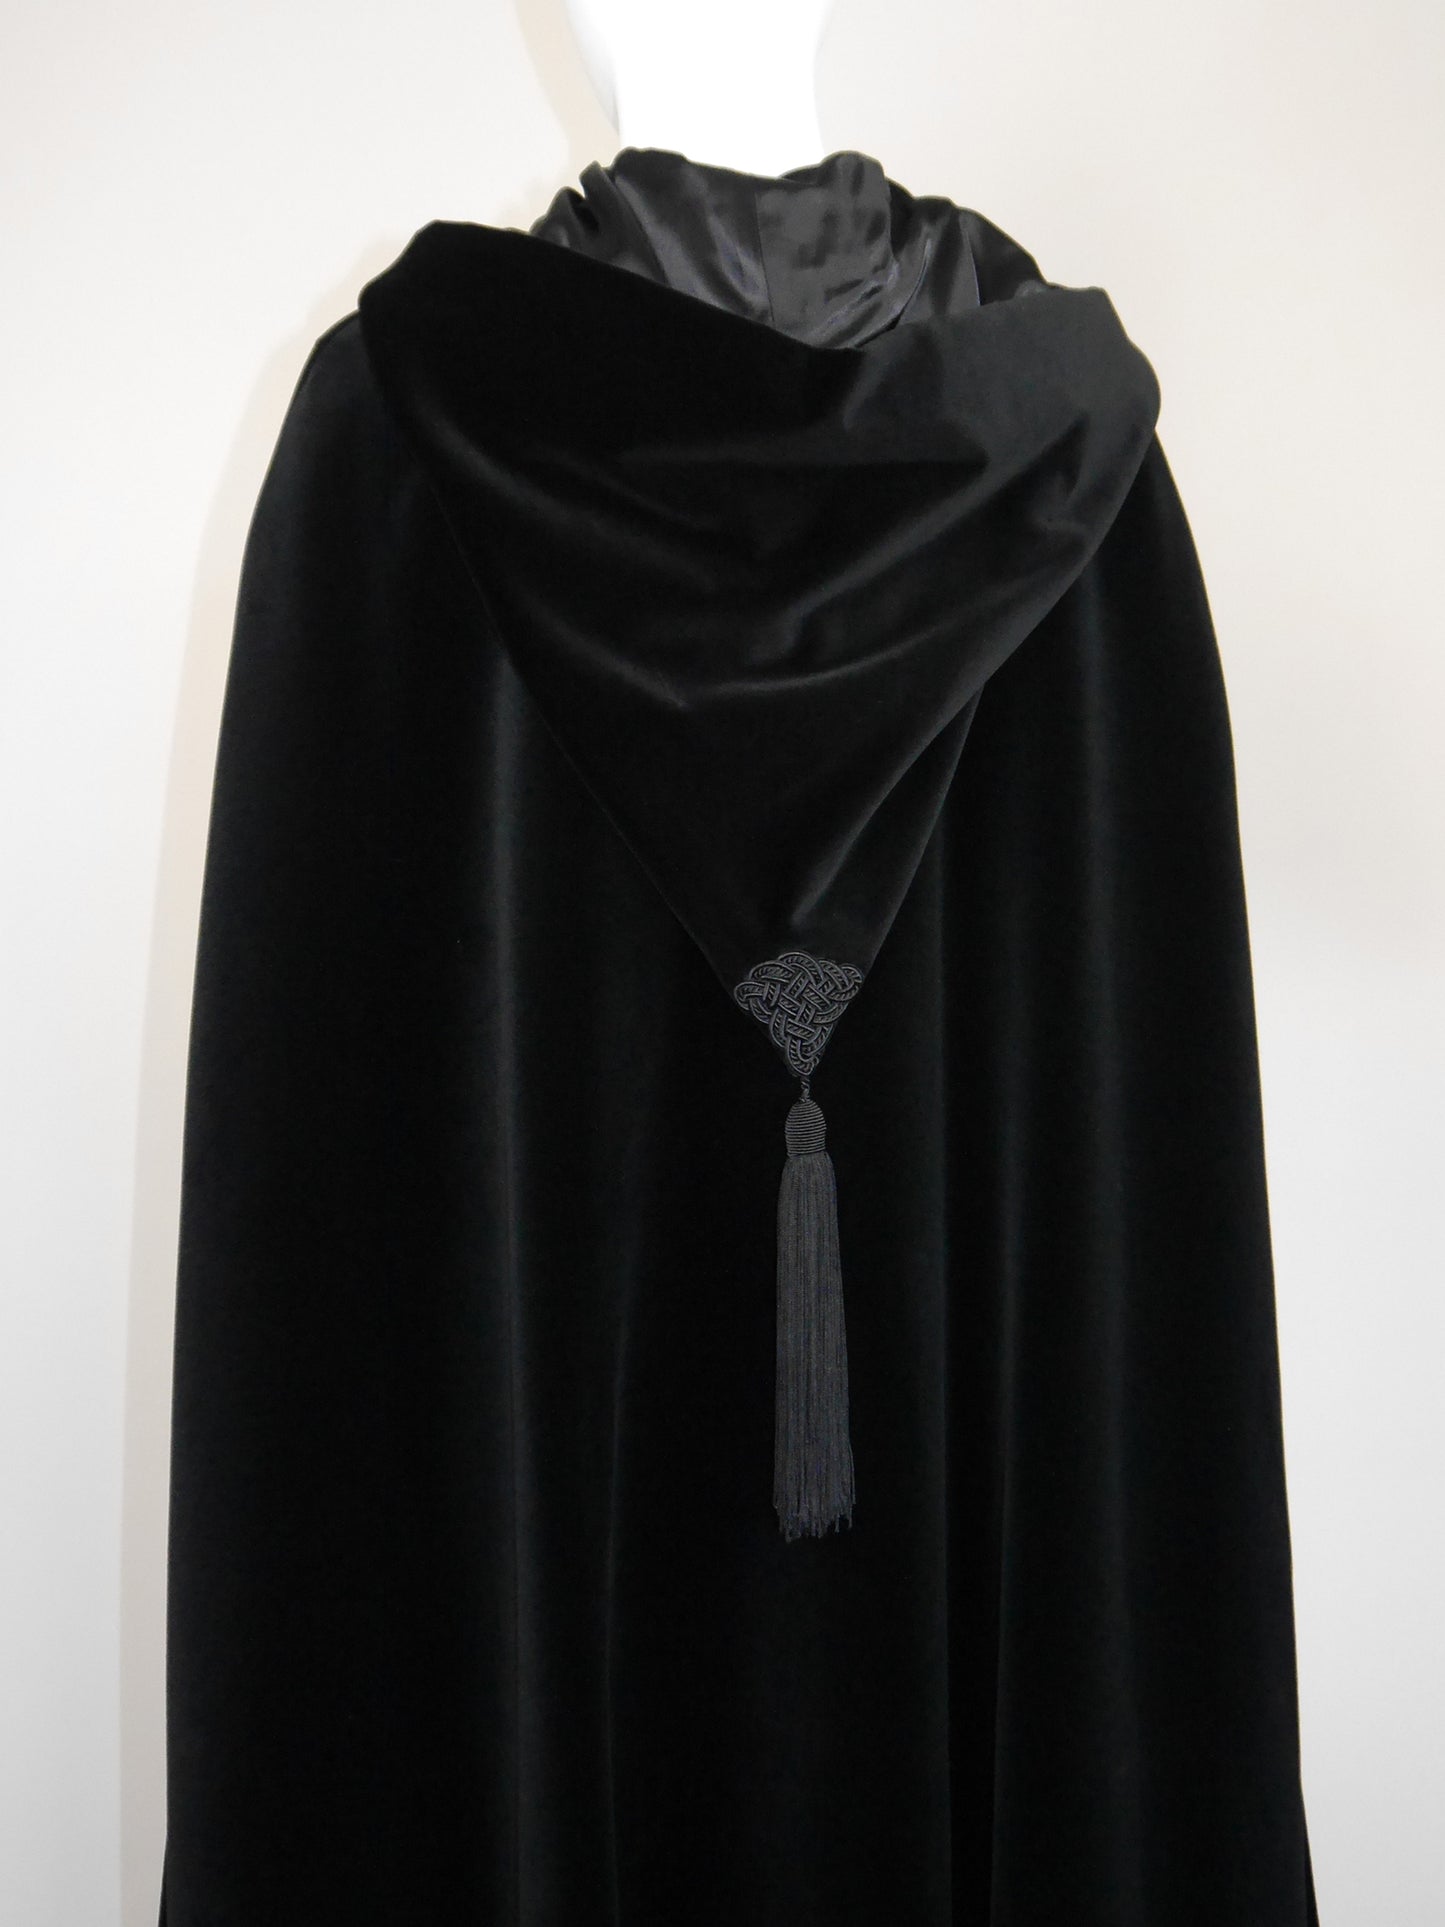 YVES SAINT LAURENT 1970s Vintage Black Velvet Hooded Maxi Cape Passementerie Size S